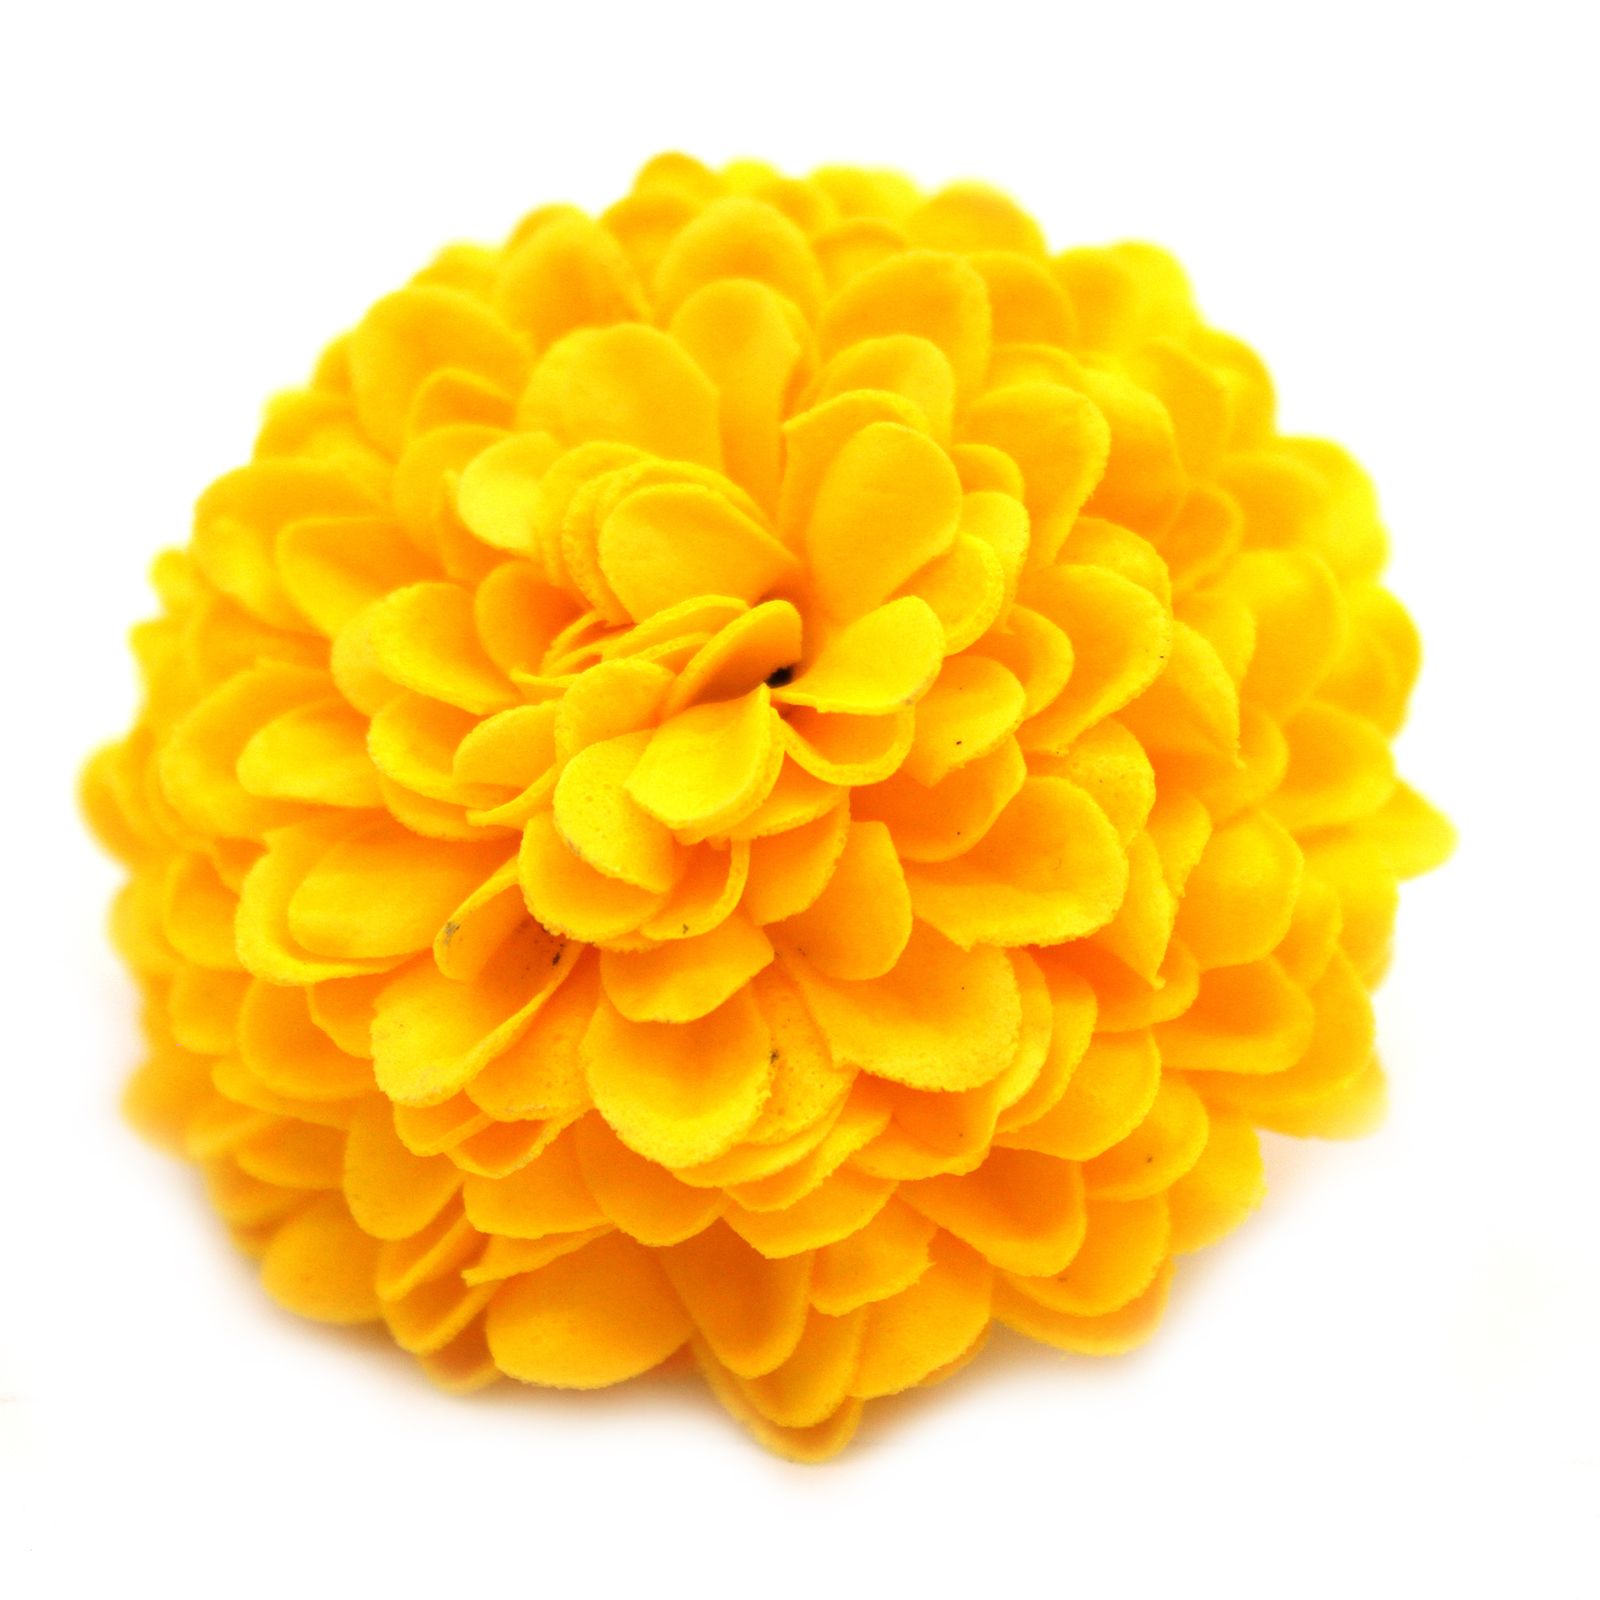 10 x Craft Soap Flowers - Small Chrysanthemum - Yellow